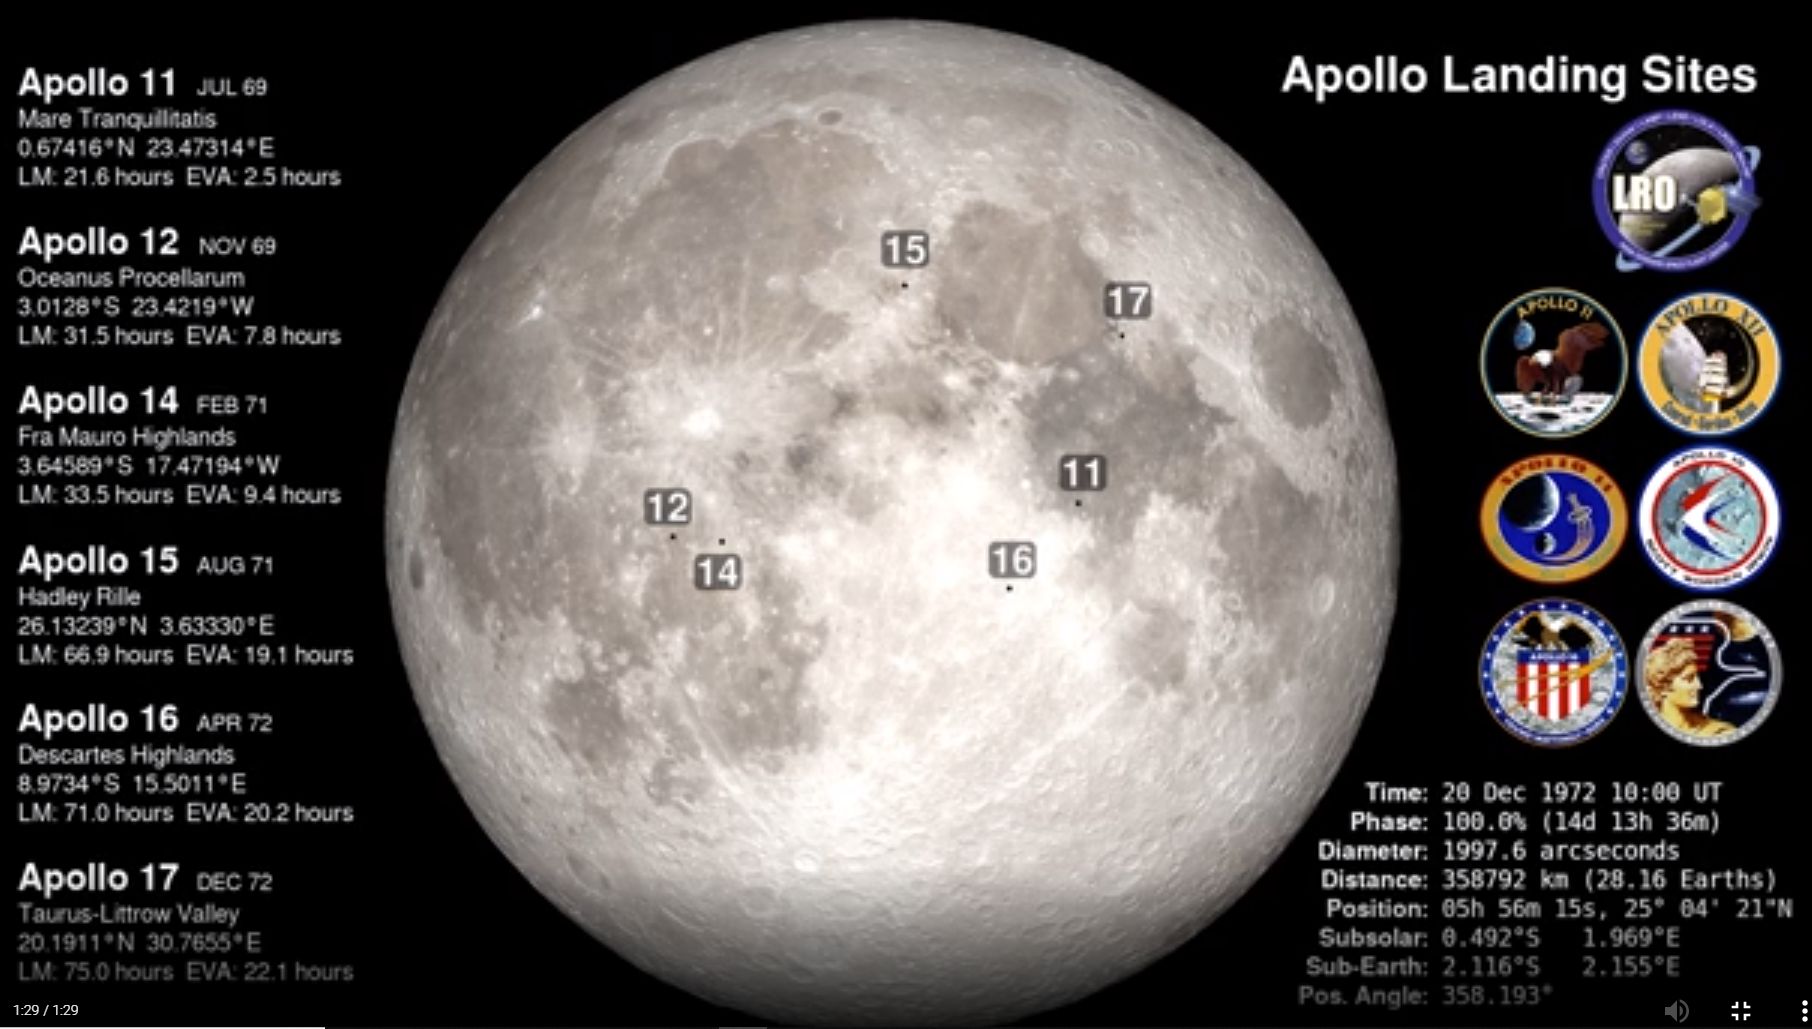 Apollo landing sites, click to see video